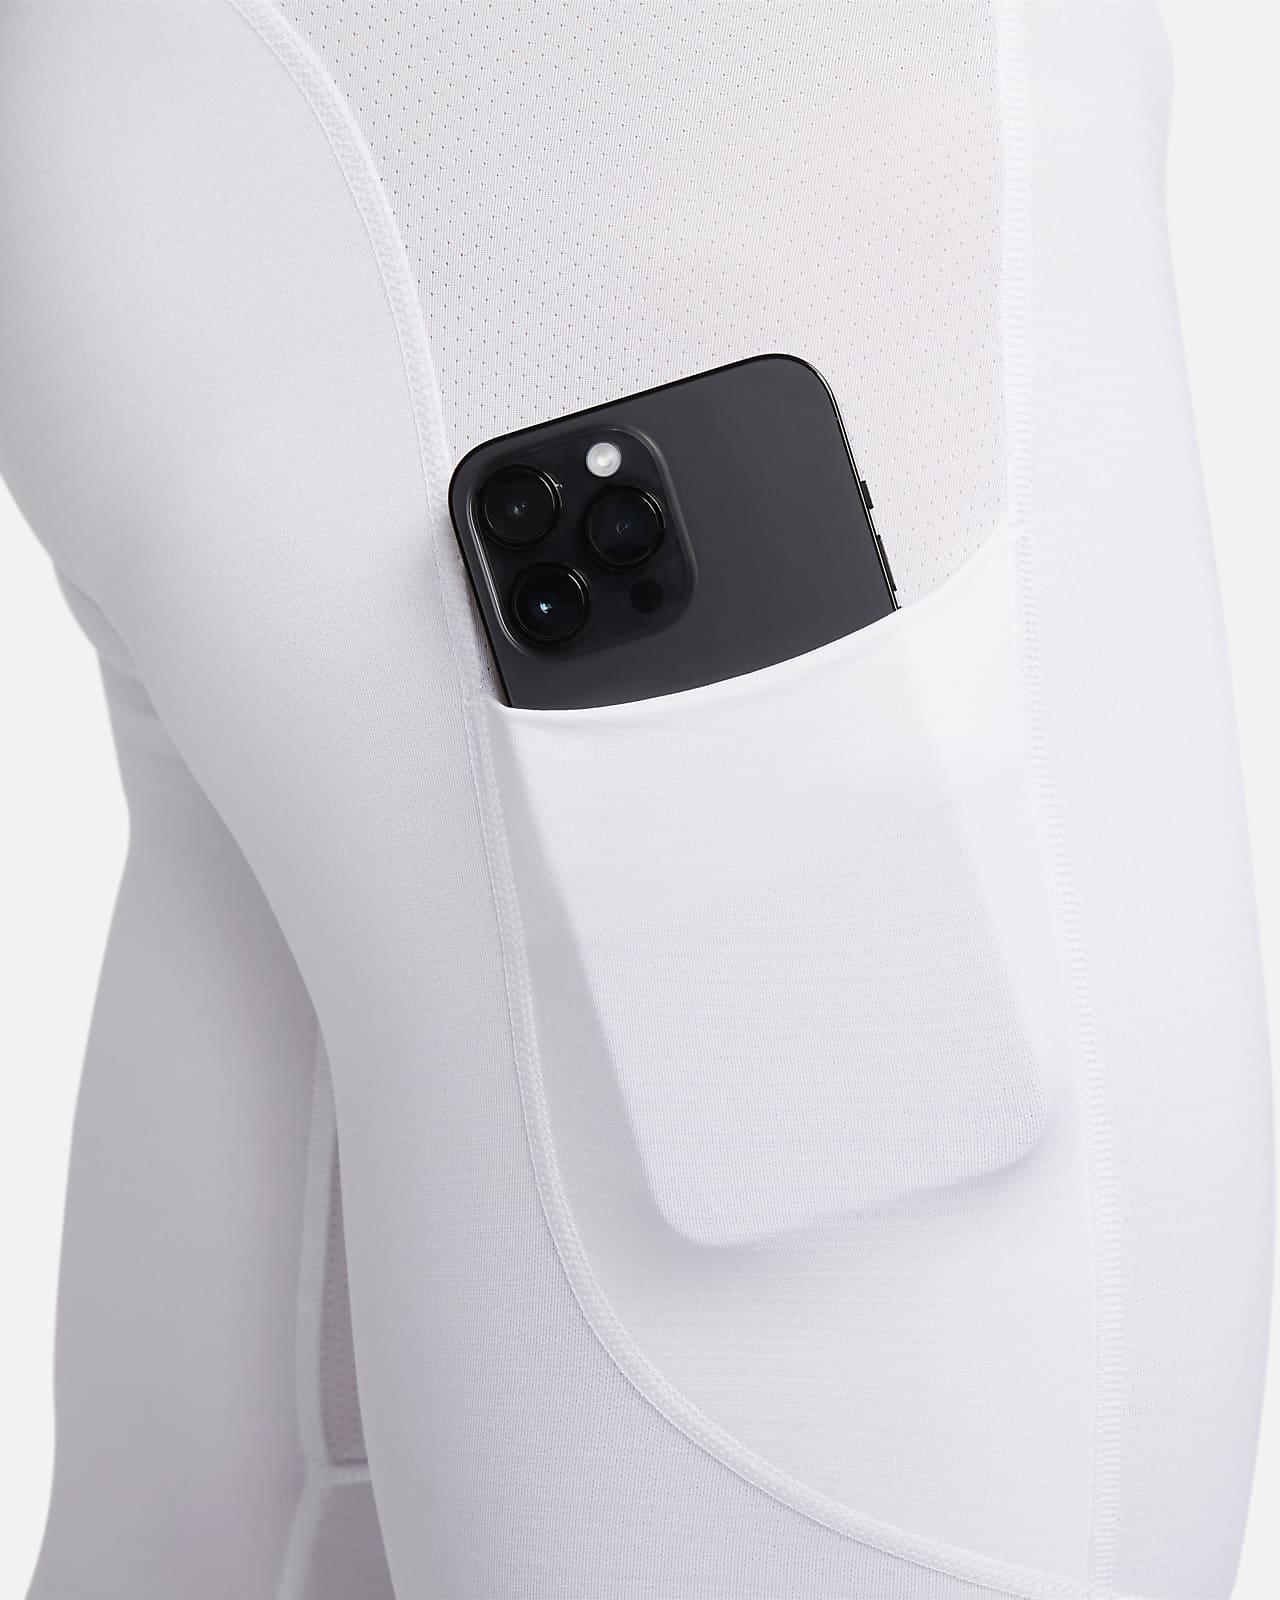 Nike pro hyperwarm leggings size small - $28 - From Sandys